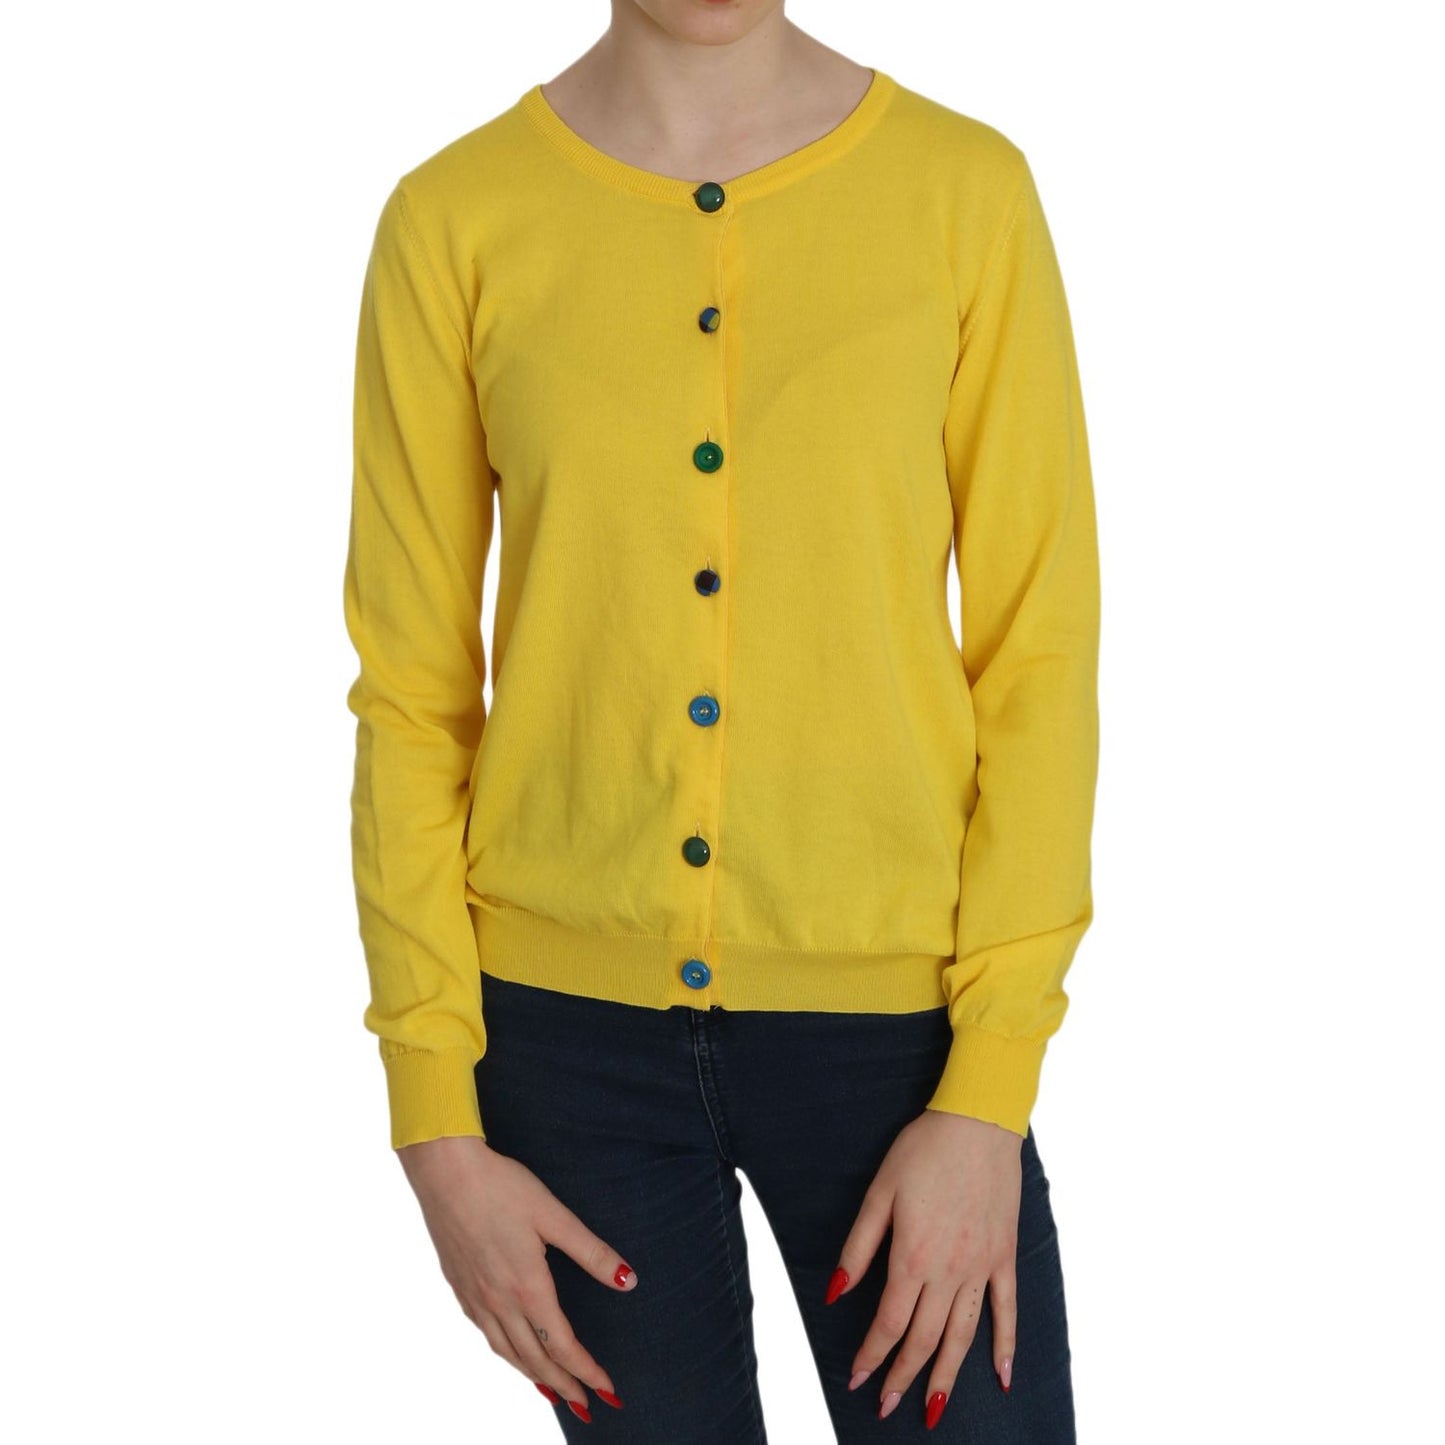 JuccaRadiant Yellow Cotton SweaterMcRichard Designer Brands£139.00